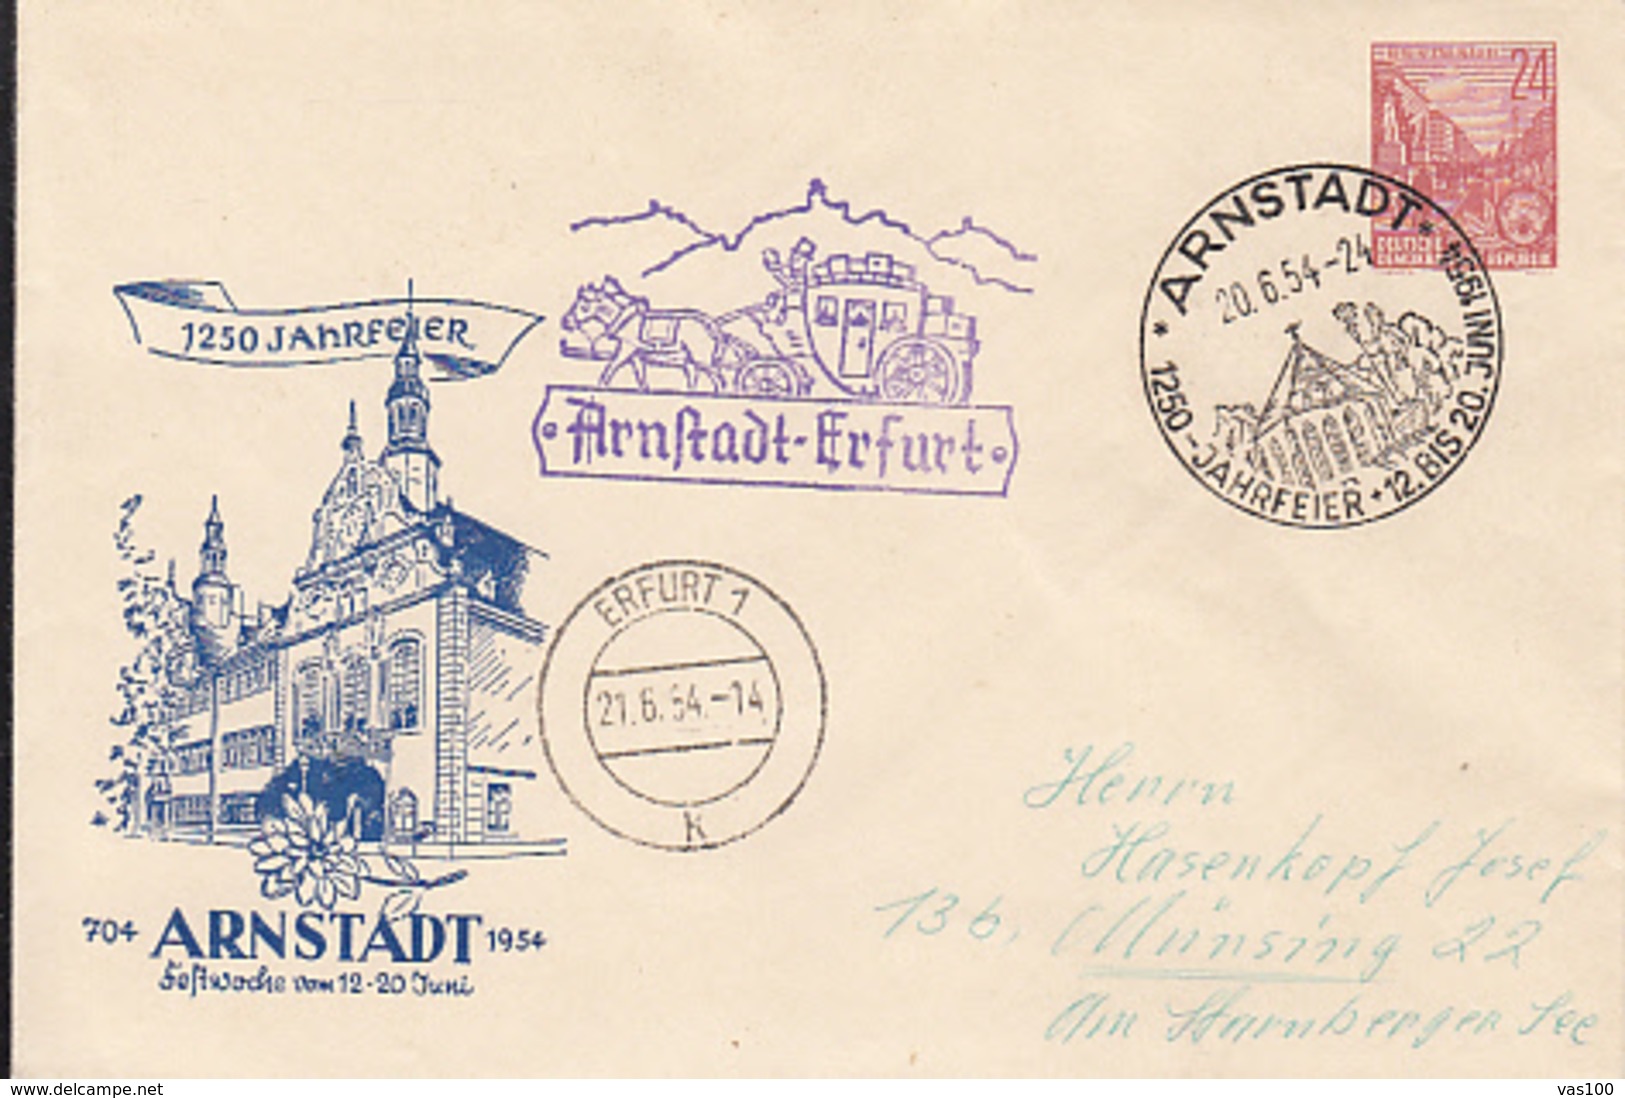 ARNSTADT TOWN ANNIVERSARY, 5 YEAR PLANS, COVER STATIONERY, ENTIER POSTAL, 1954, GERMANY - Briefomslagen - Gebruikt